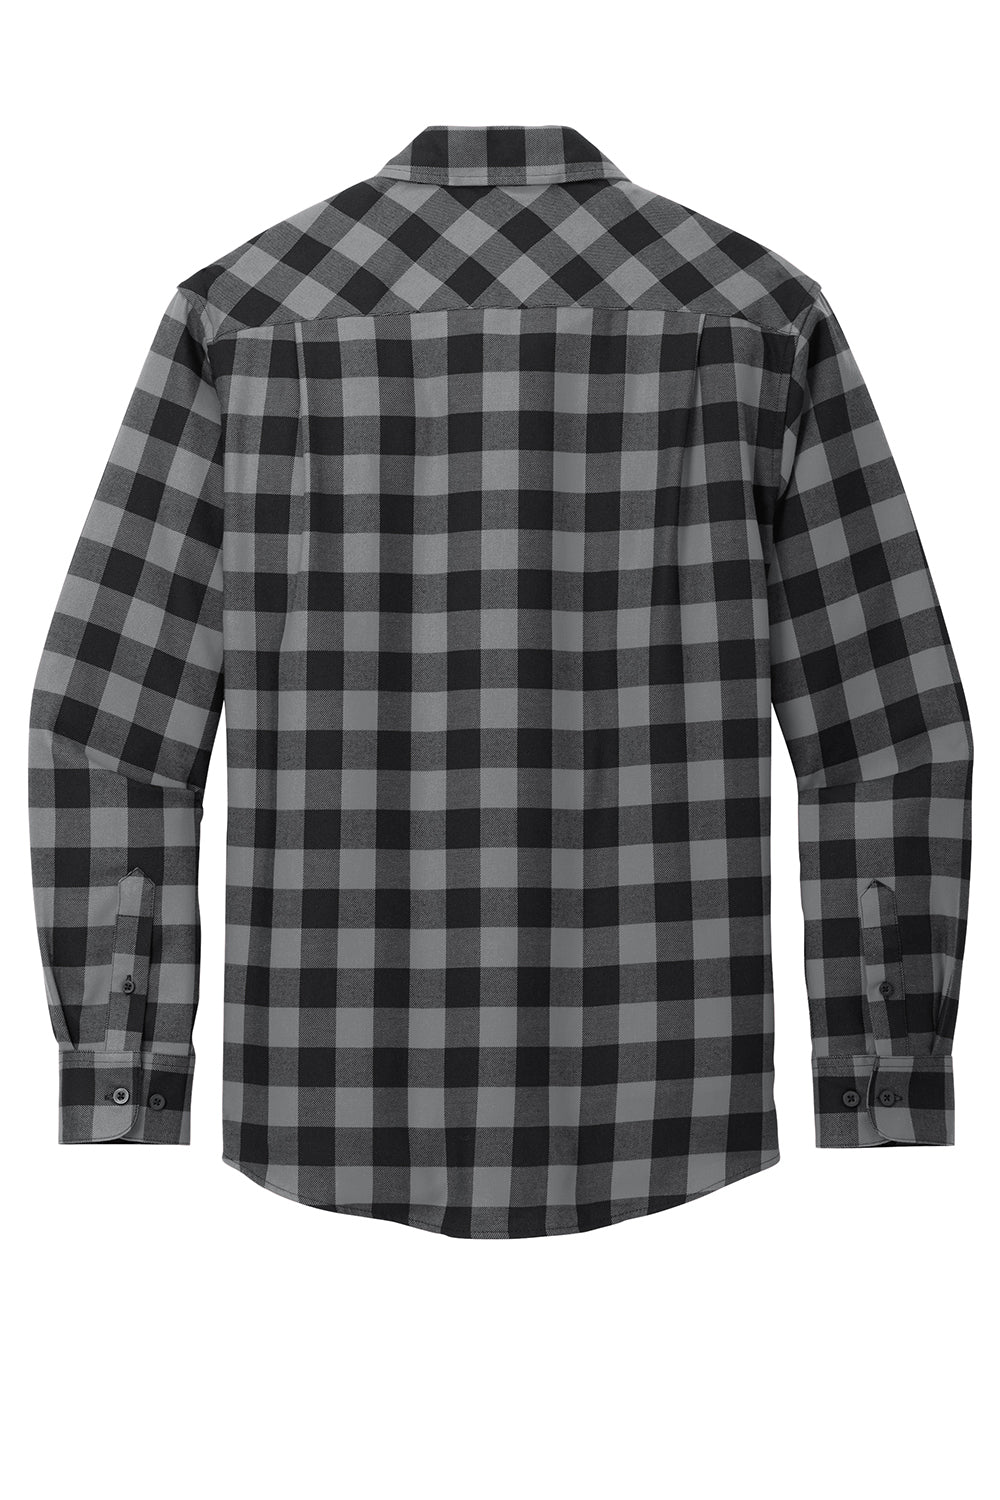 Port Authority W668 Mens Flannel Long Sleeve Button Down Shirt w/ Double Pockets Grey/Black Buffalo Flat Back